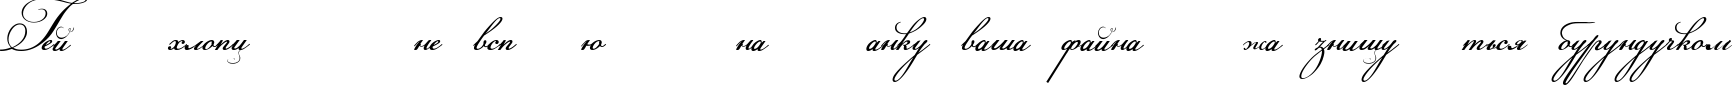 Пример написания шрифтом Champignon script текста на украинском